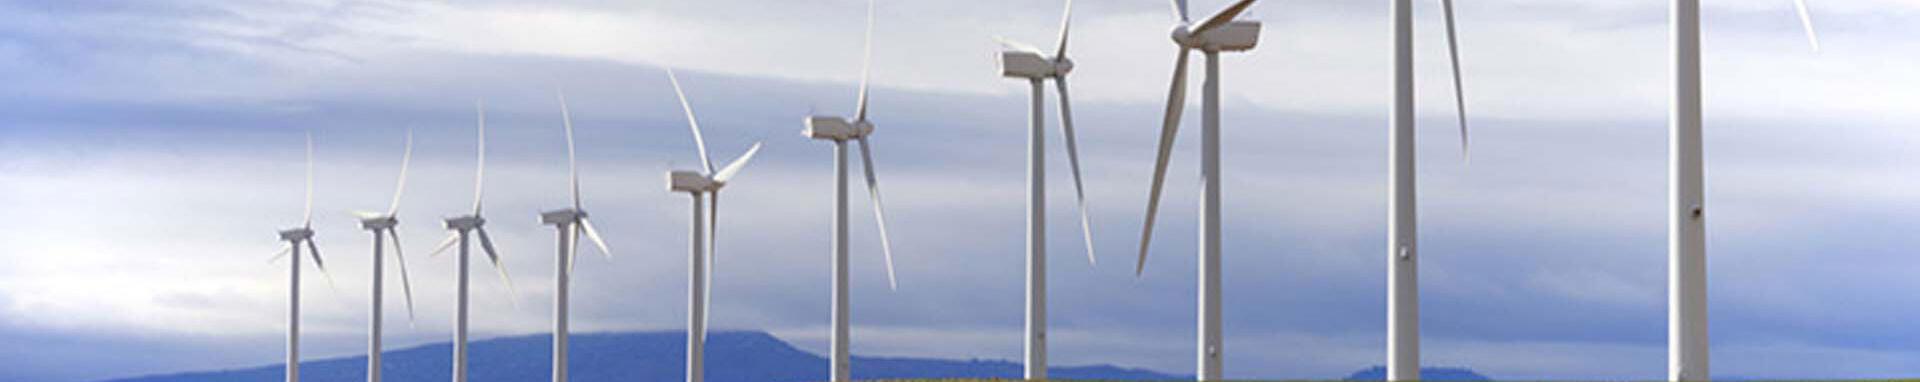 Yermentau Large Wind Power Plant